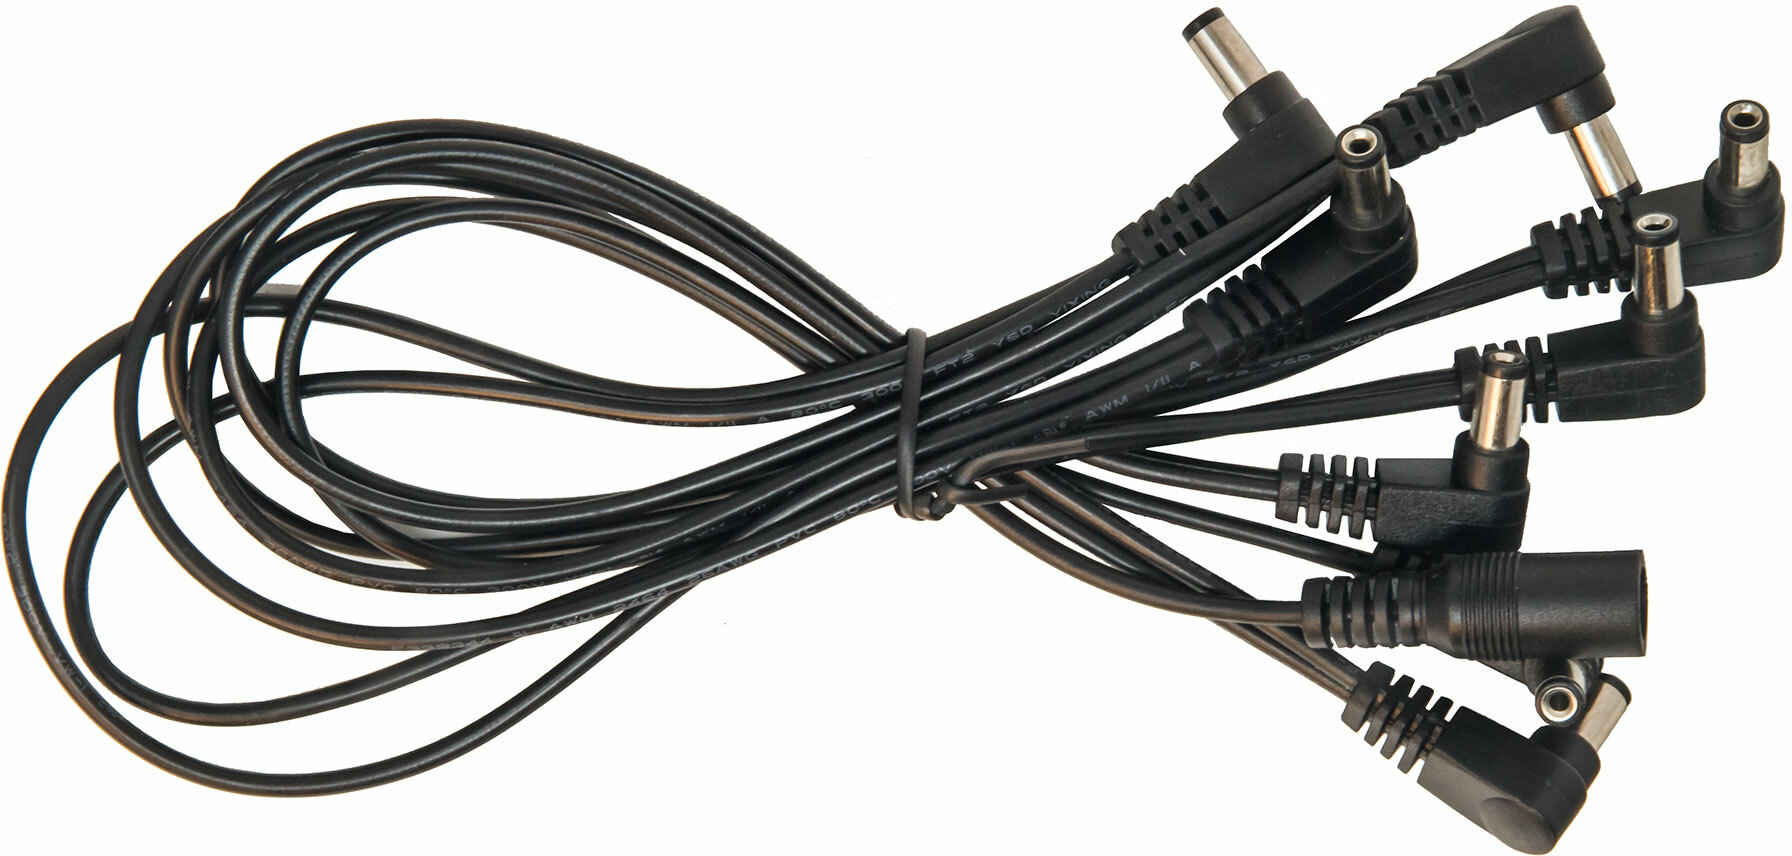 X-tone 8-way Chain Cable Alimentation Pedales - Adaptateur Connectique - Main picture